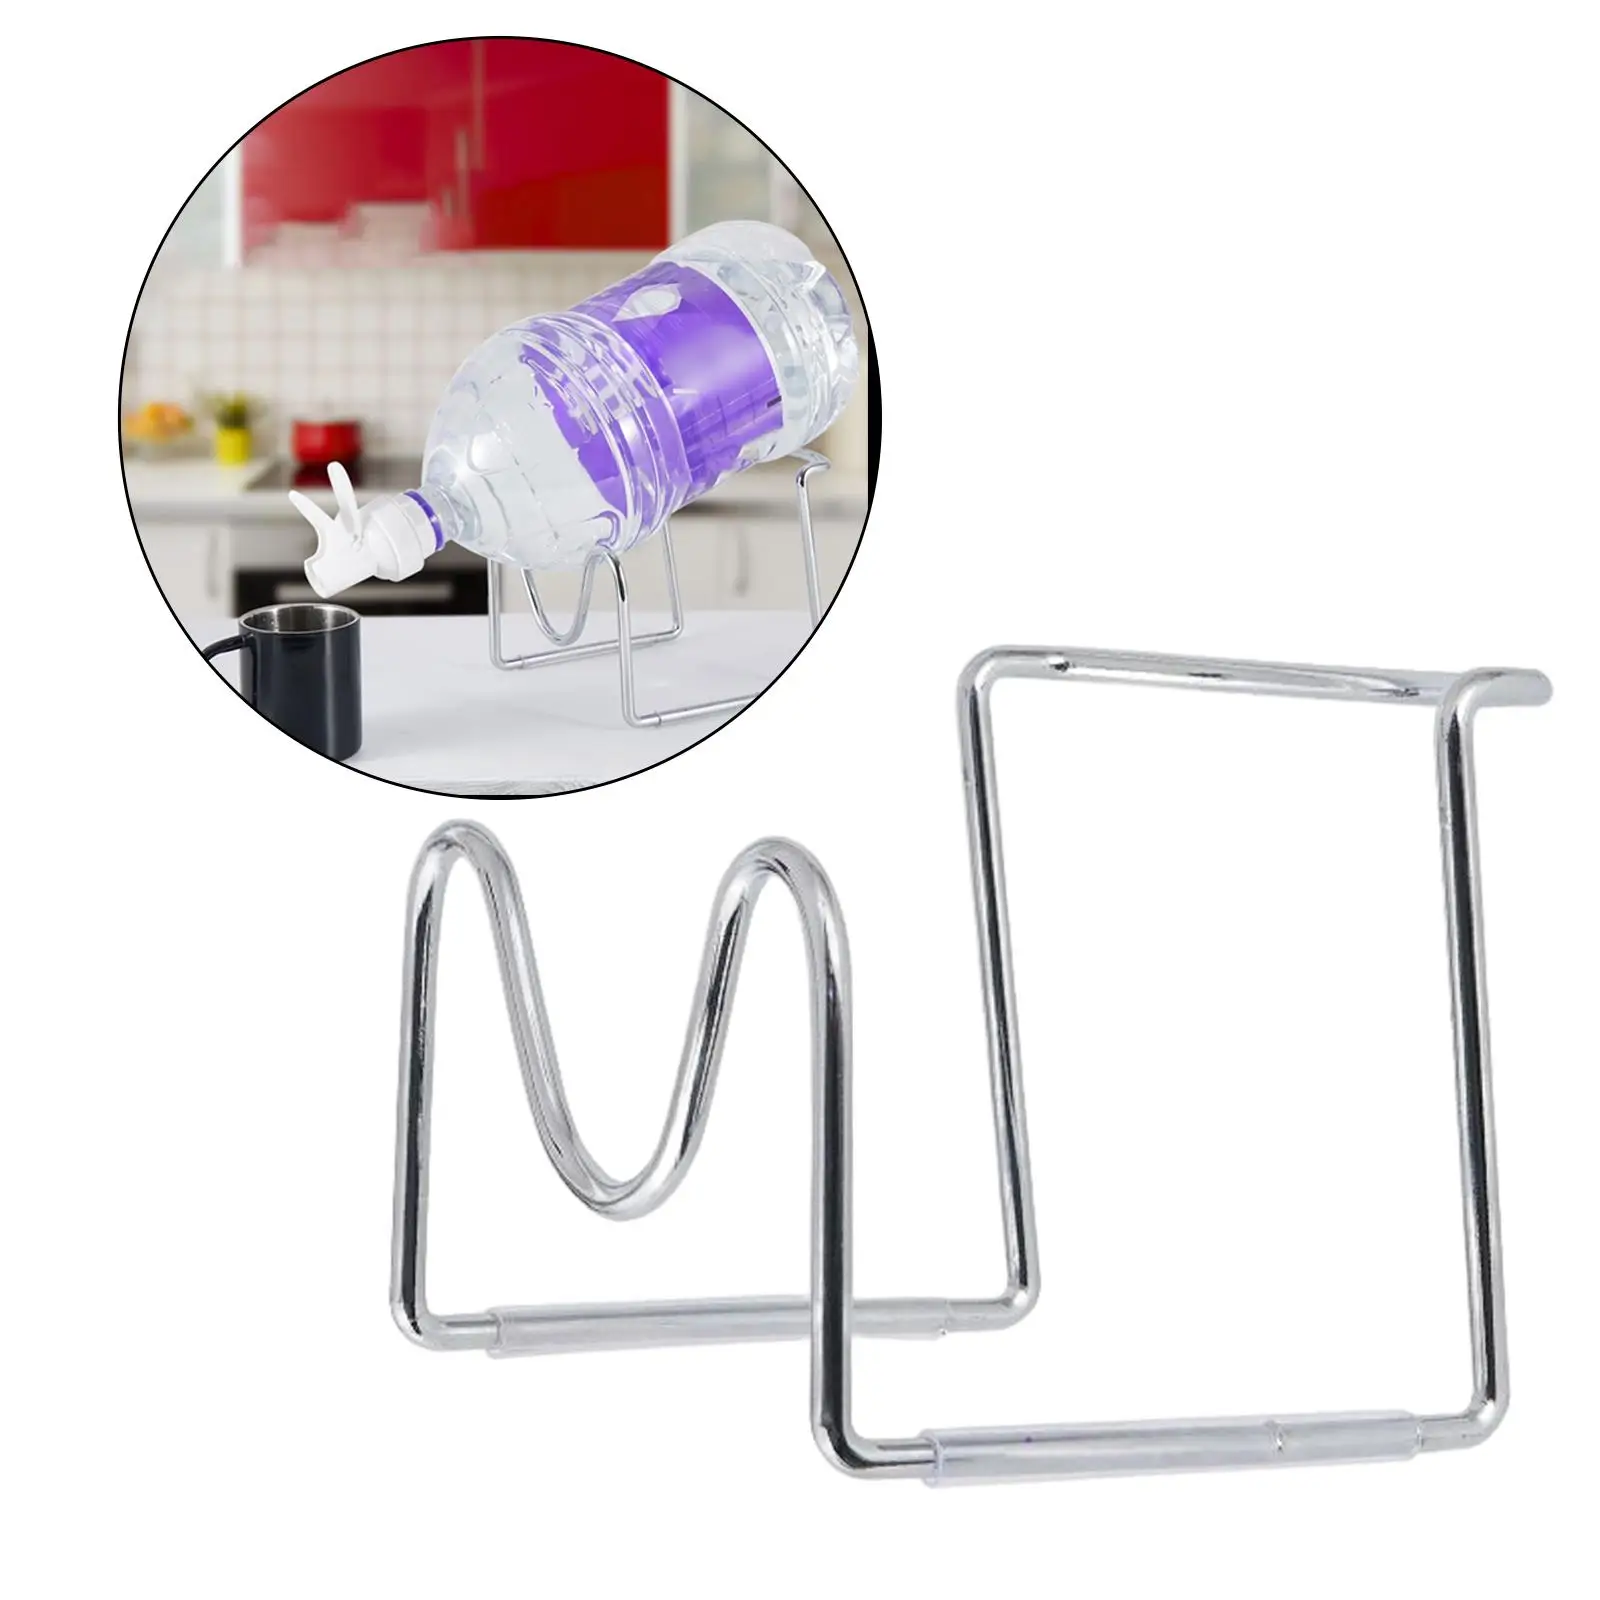 Non Slip Water Bottle Holder Water Dispenser Stand Beverage Holder Cradle Rack Water Jug Stand for Kitchen